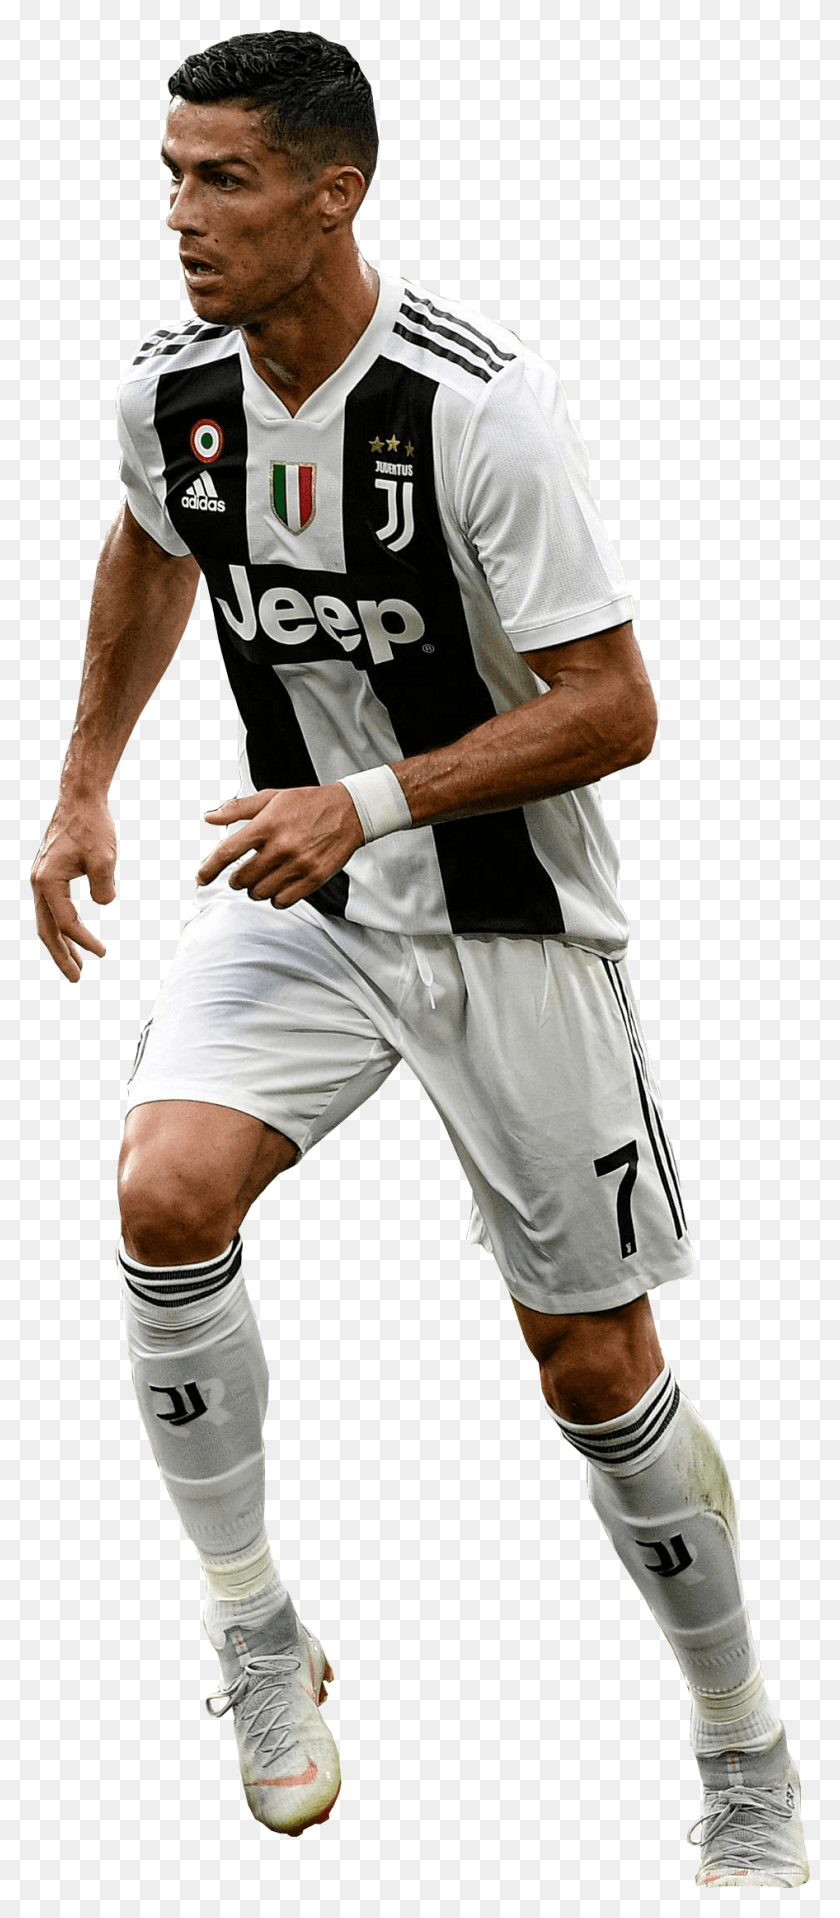 946x2254 La Juventus Ronaldo Png / La Juventus Ronaldo Hd Png